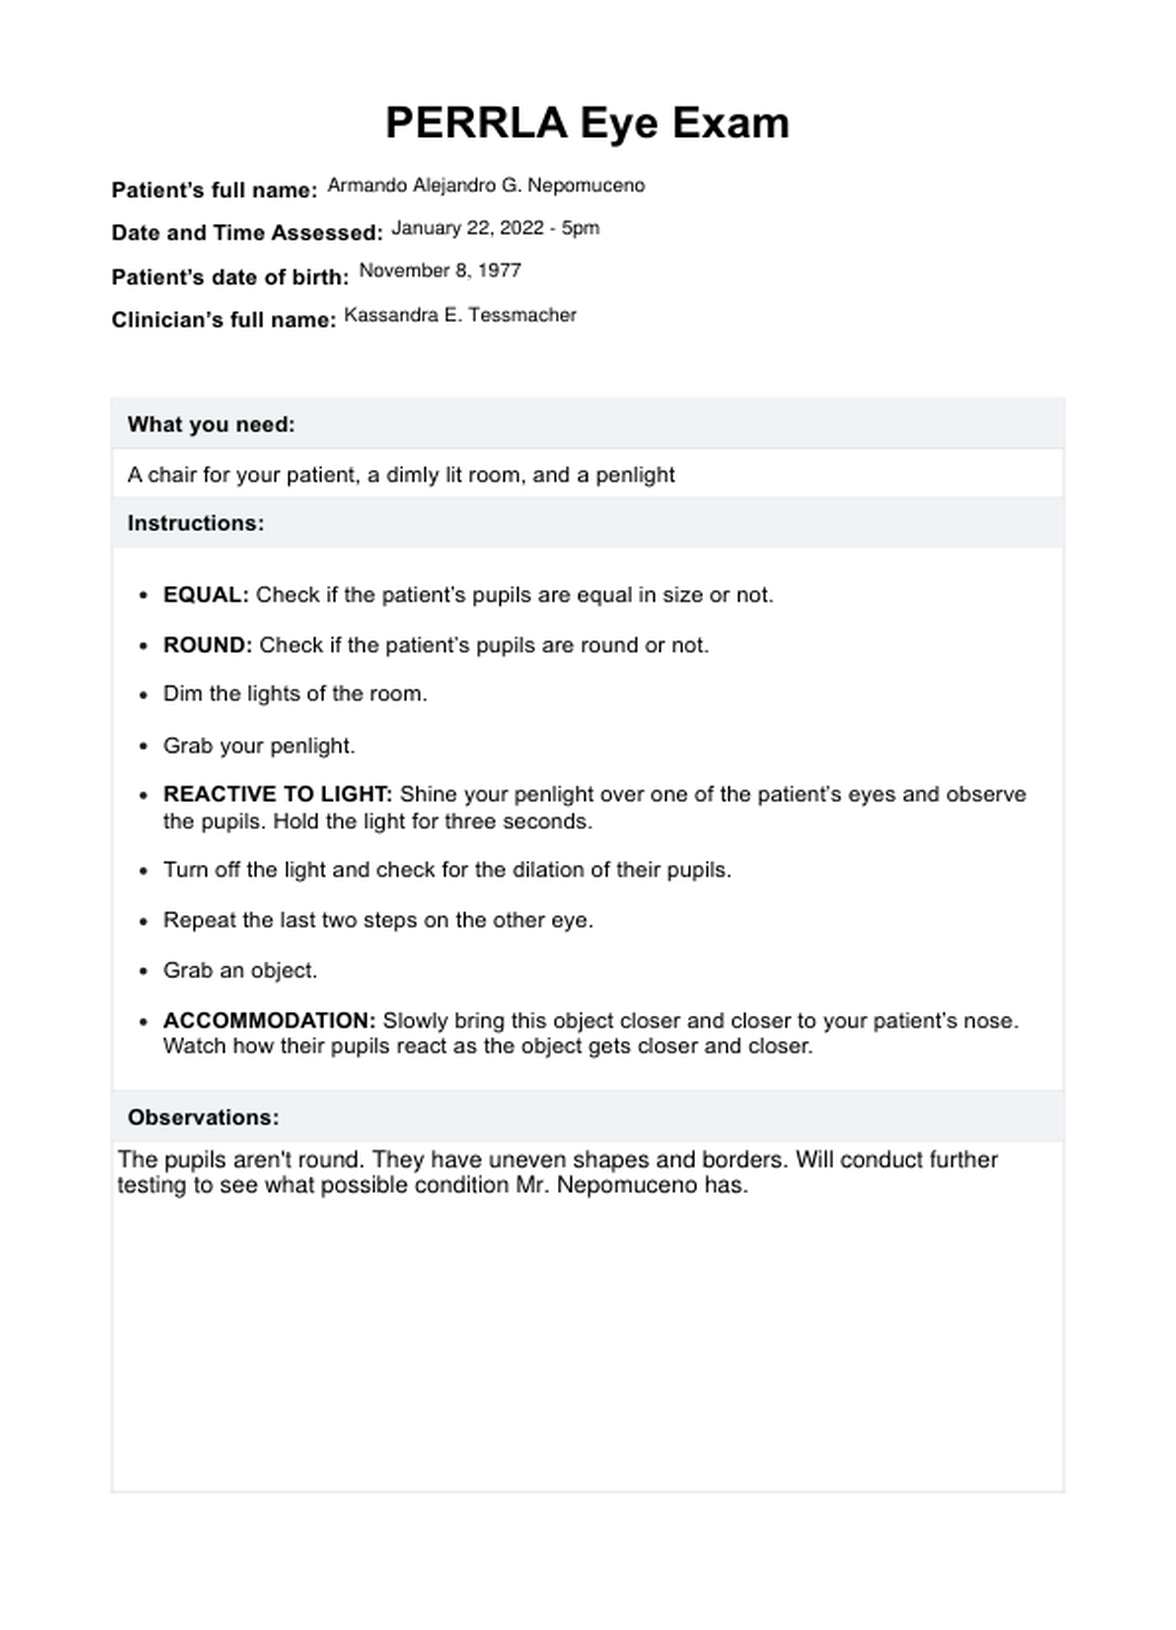 PERRLA Eye Exam PDF Example